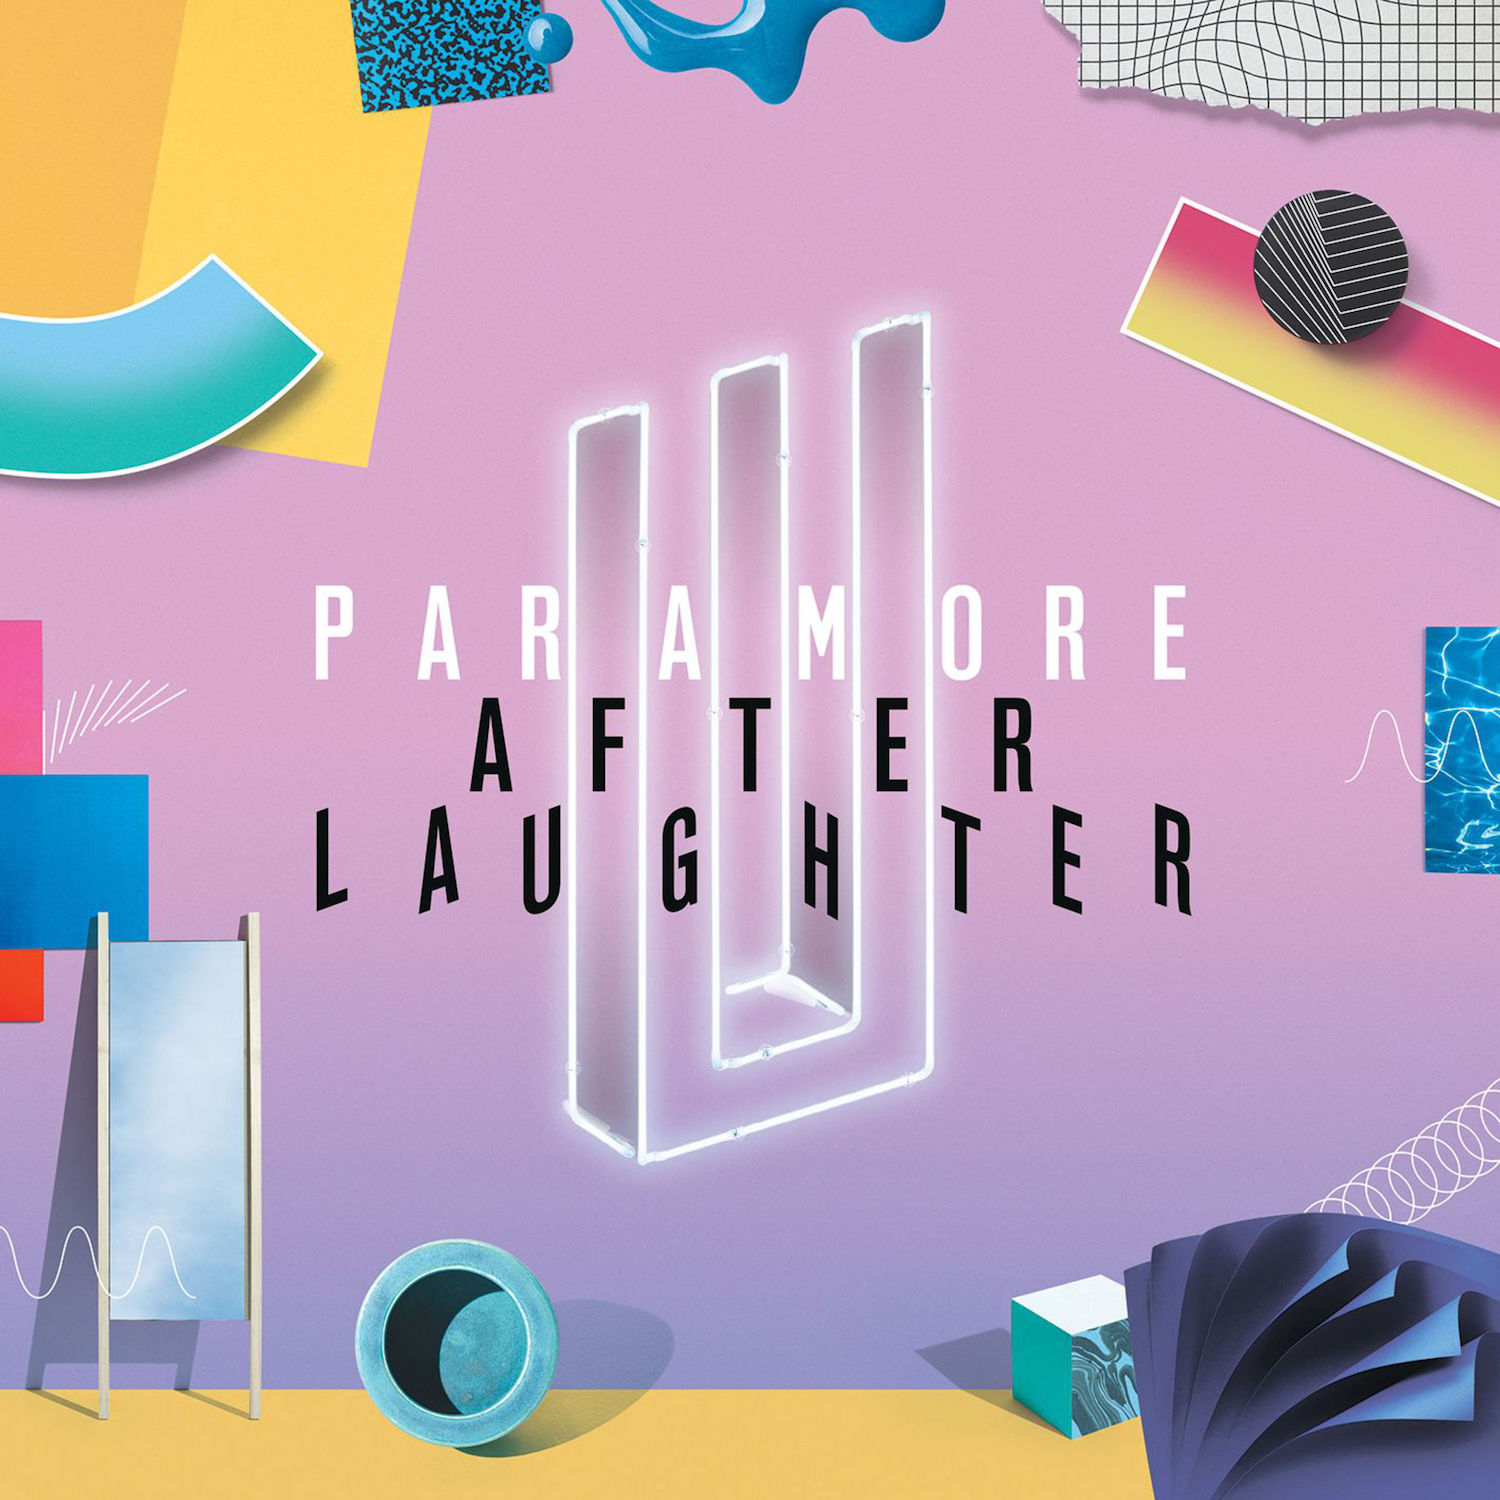 The Designer Behind Paramore's New Album Artwork On Visually